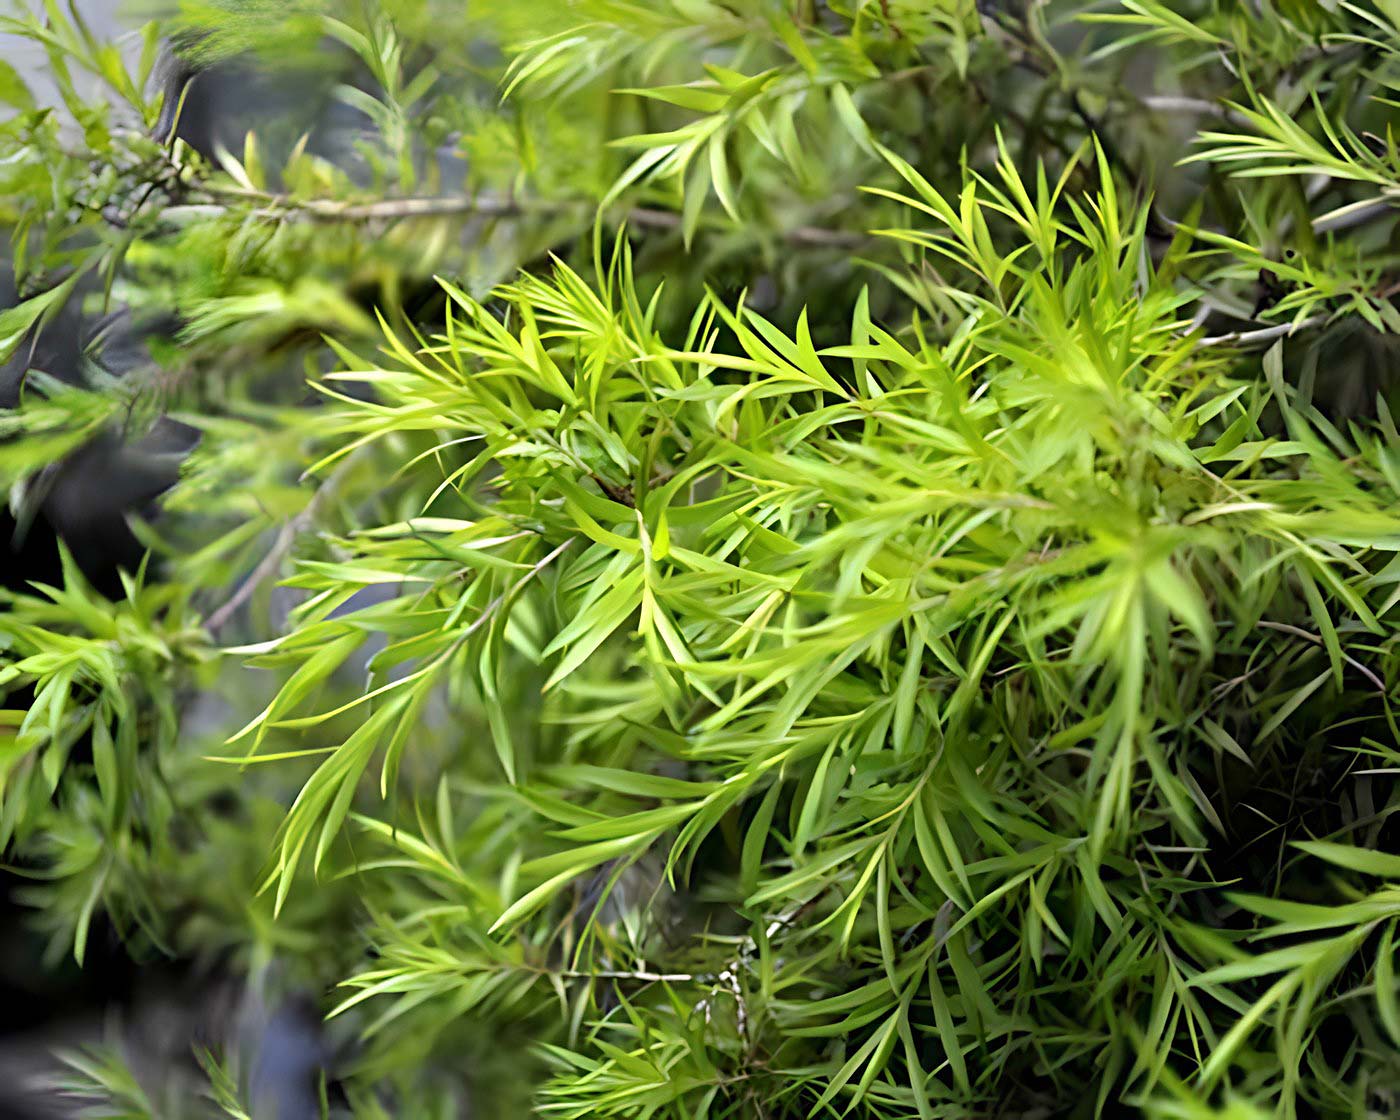 Melaleuca bracteata Revolution Green